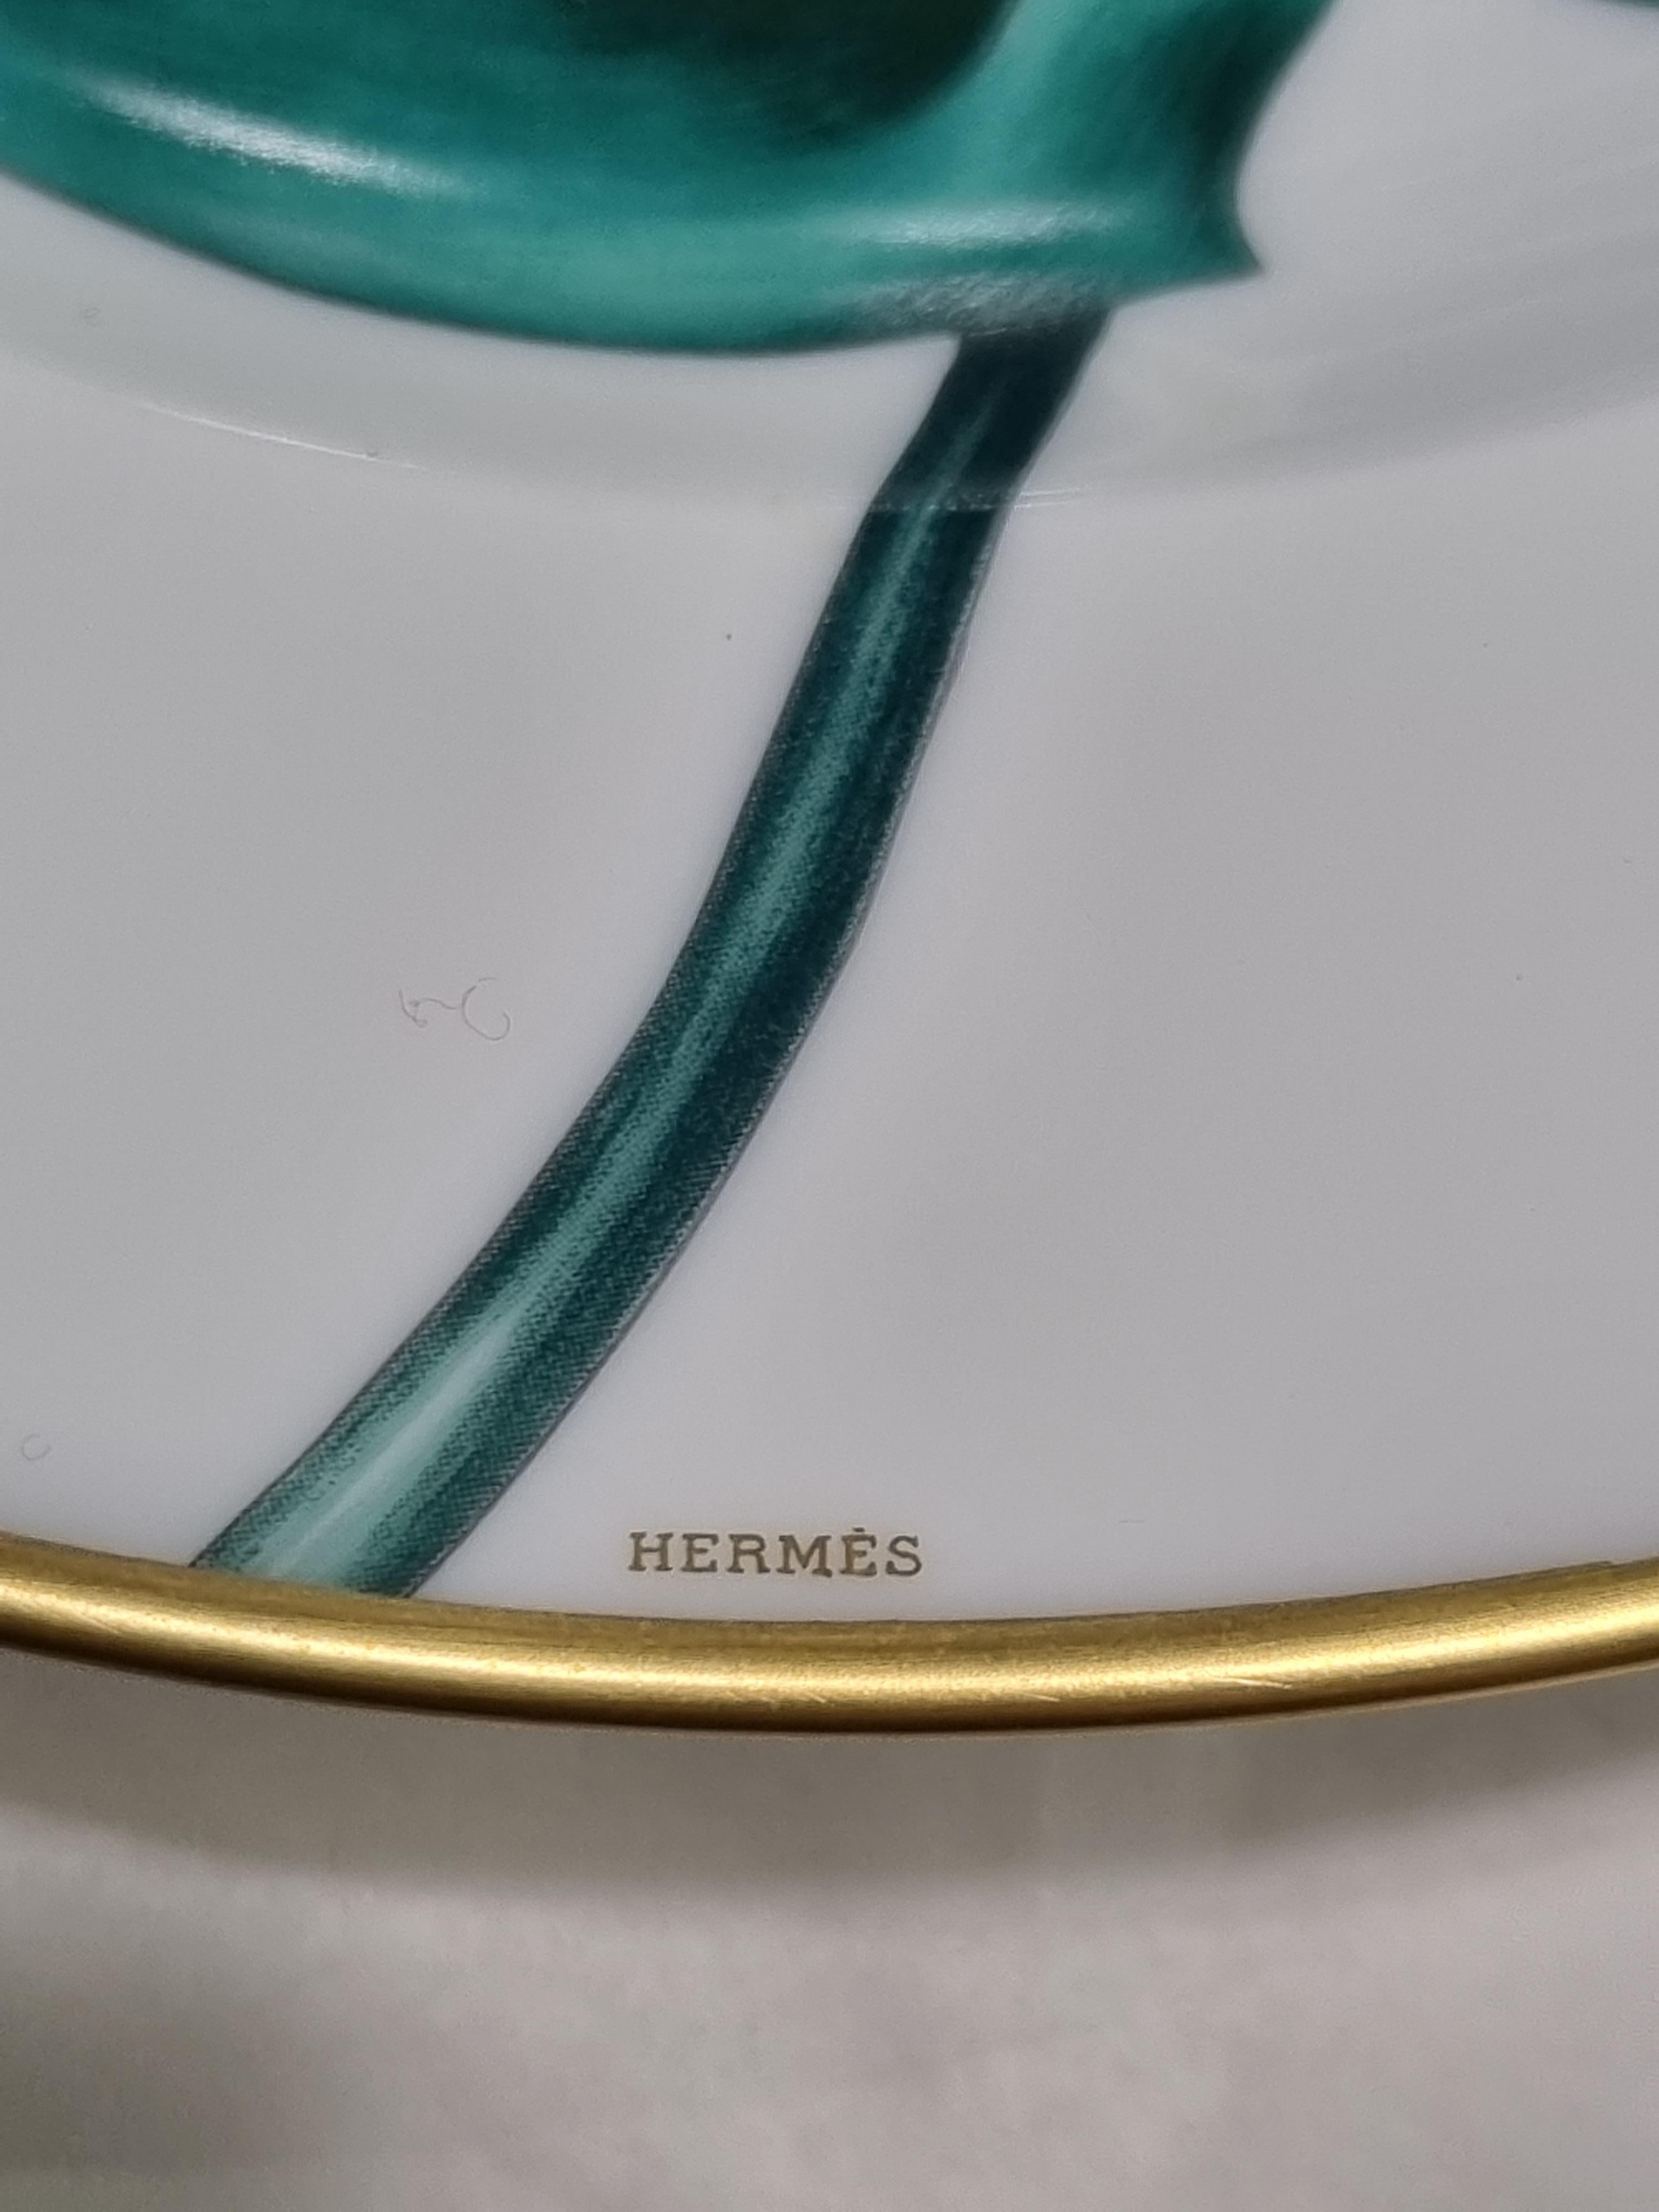 hermes plates set